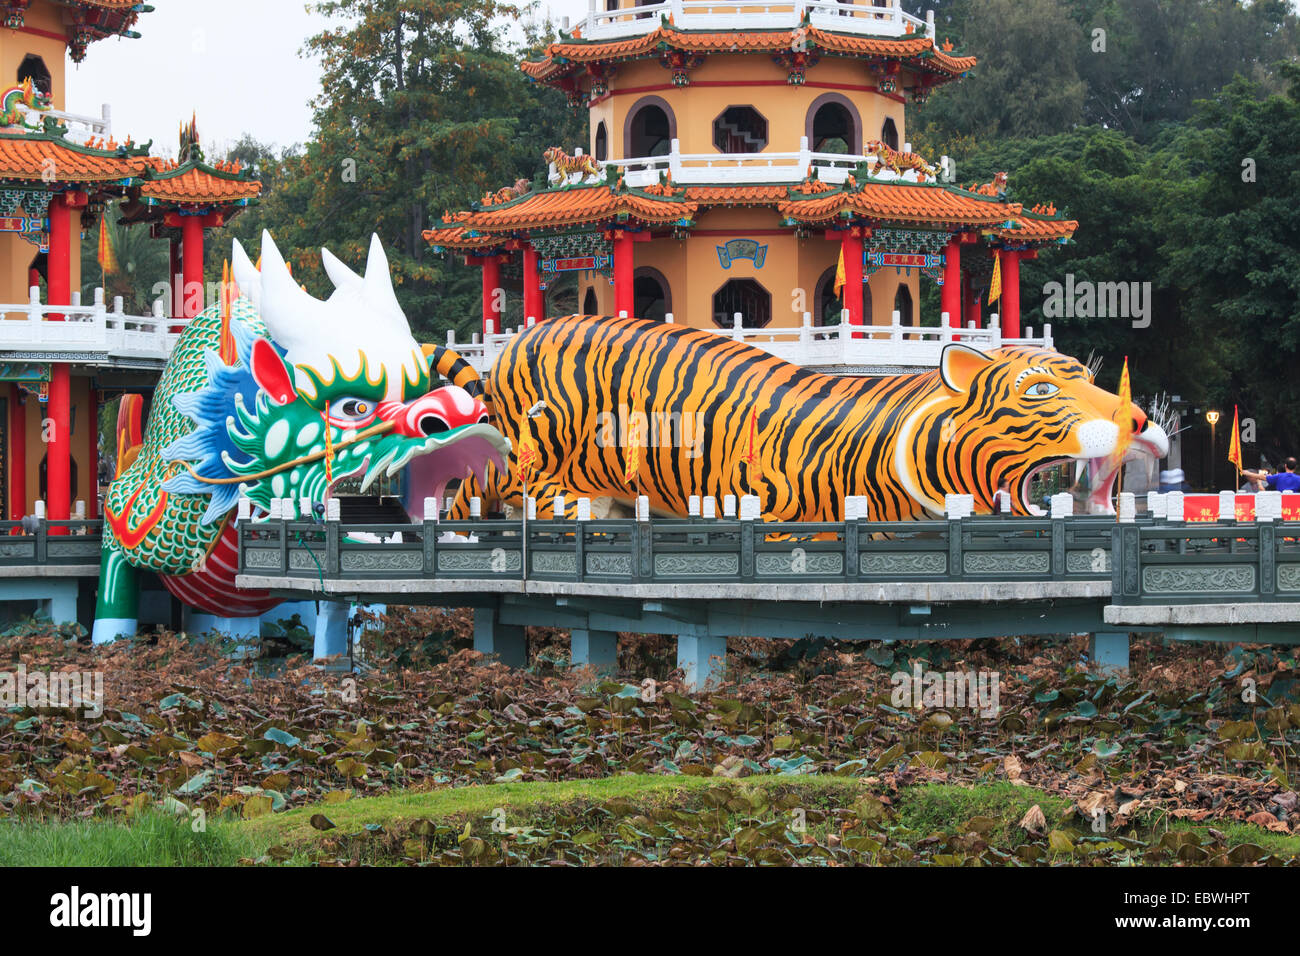 Dragon And Tiger Pagodas at Lotus Pond, Kaohsiung, Taiwan Stock Photo